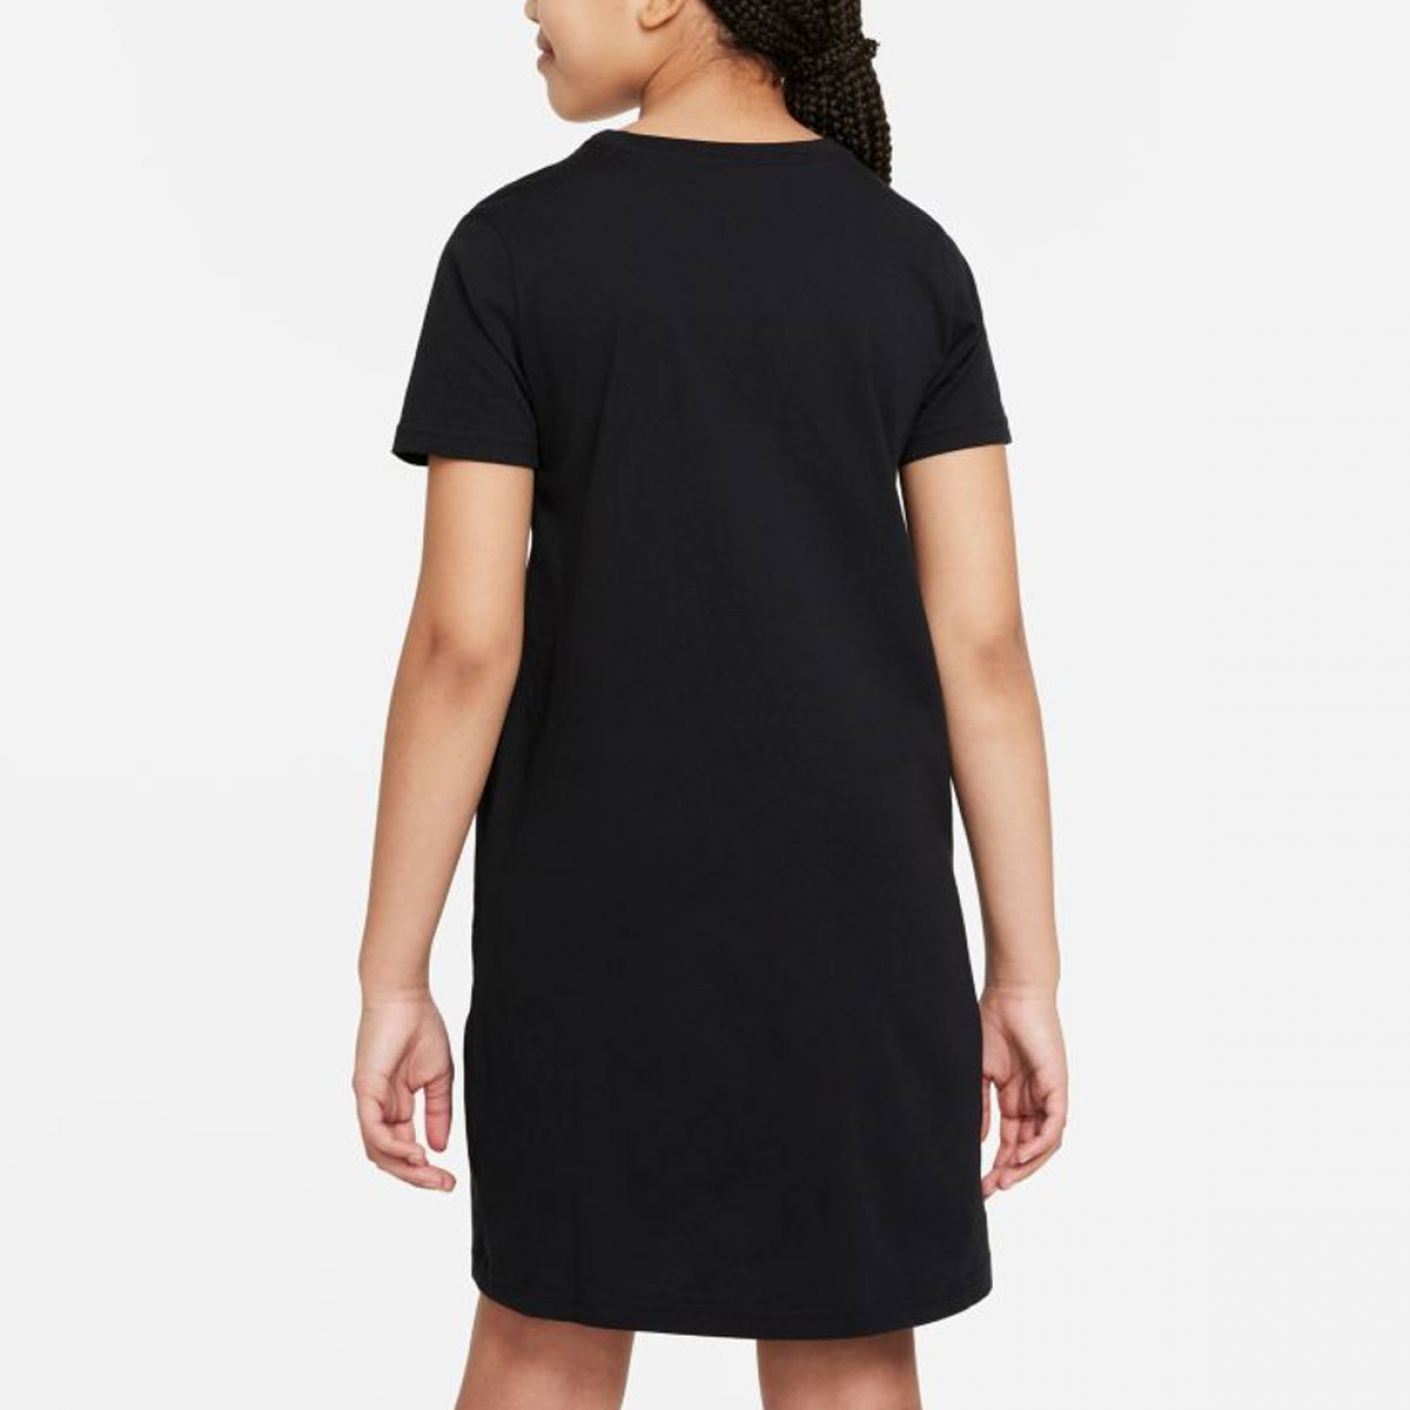 Nike Futura Black T-shirt Dress for Girls